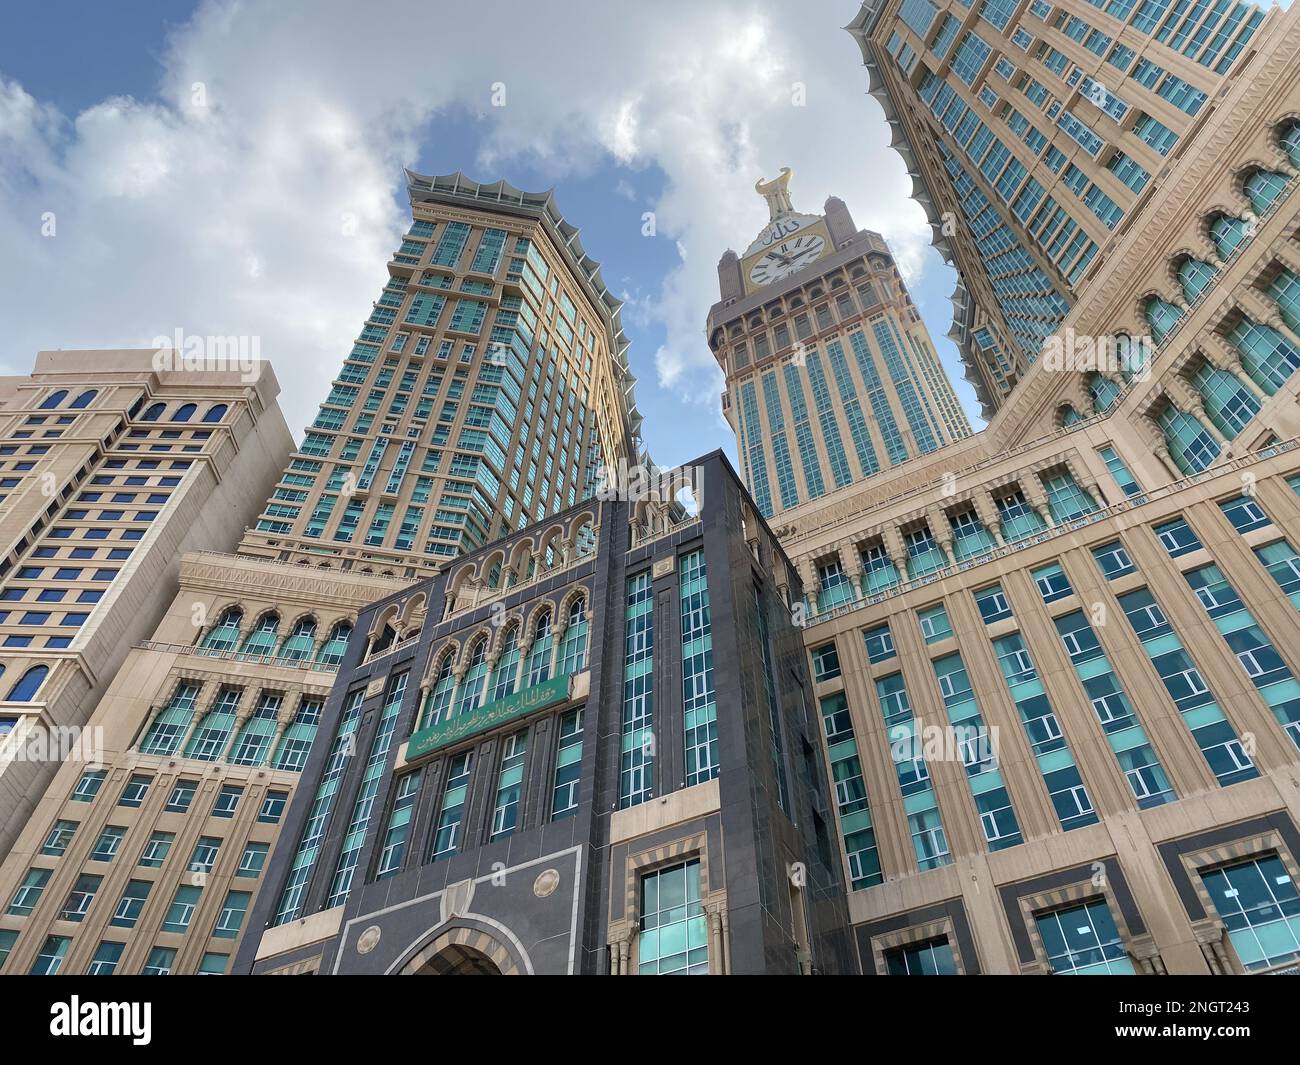 Zam zam Tower or Clock Tower - Abraj Al Bait Masjid Al Haram Stock Photo